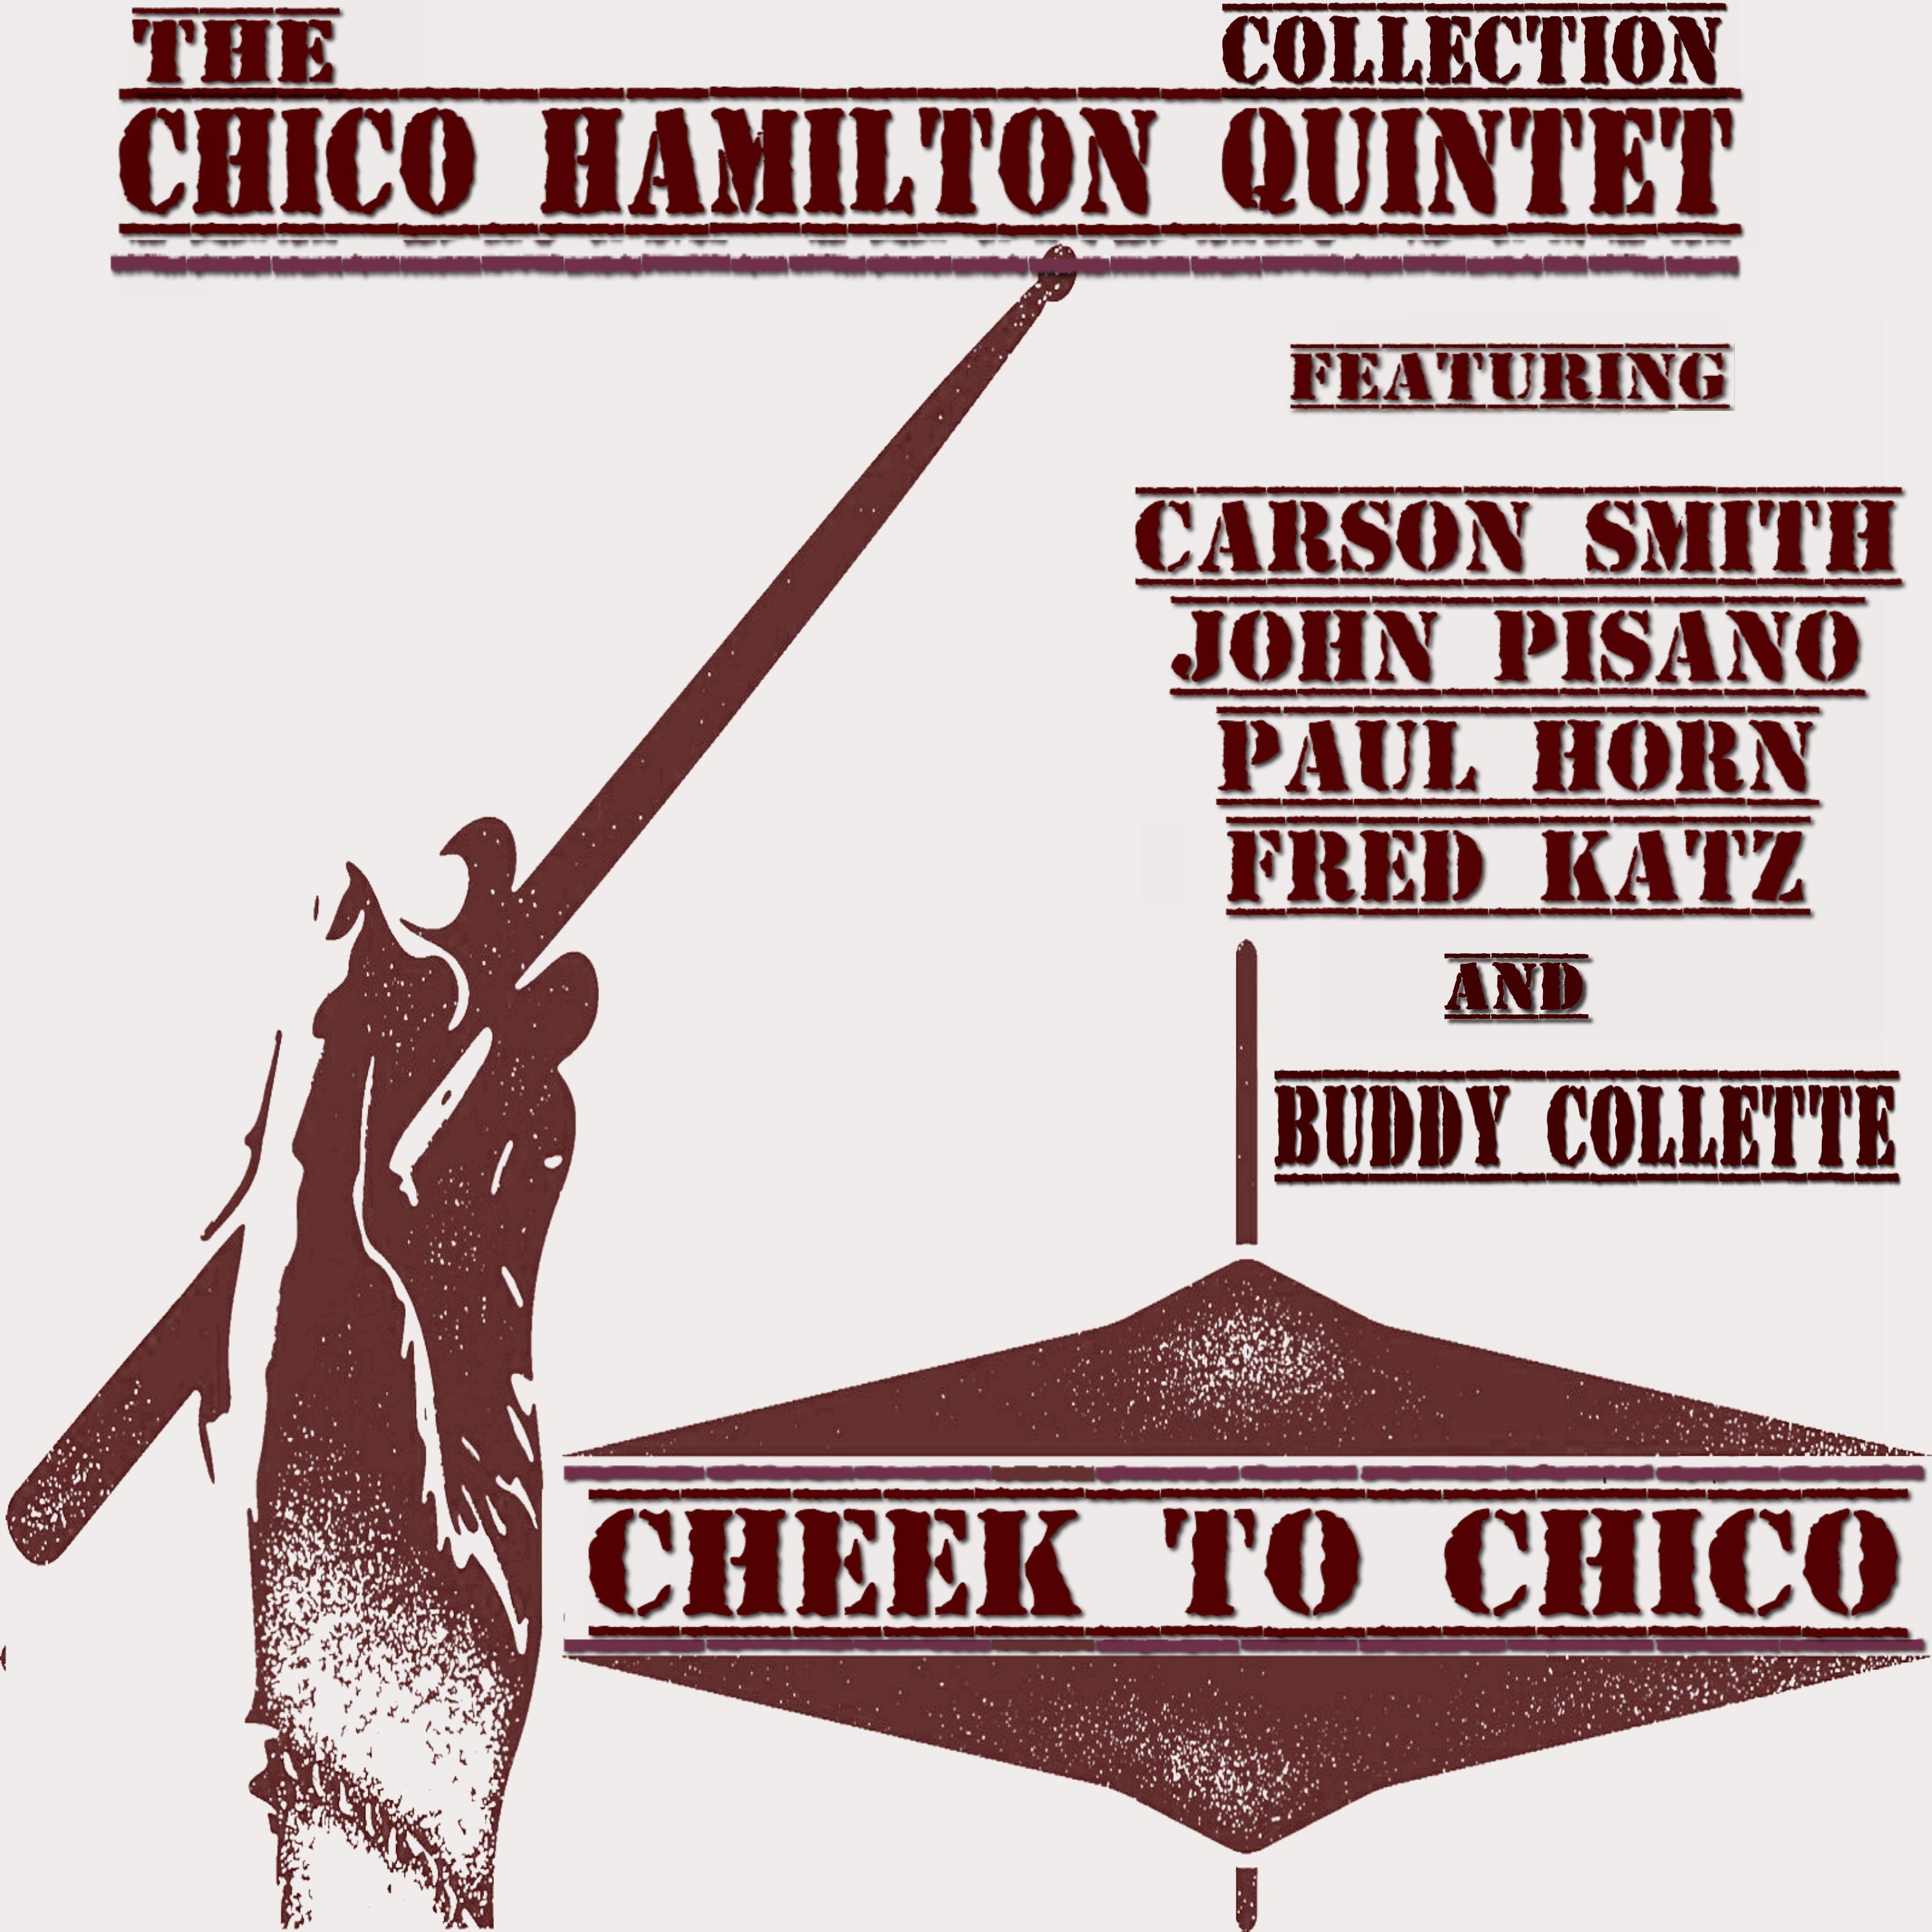 The Chico Hamilton Quintet - Cheek to Chico (feat. Carson Smith, John Pisano, Paul Horn, Fred Katz)